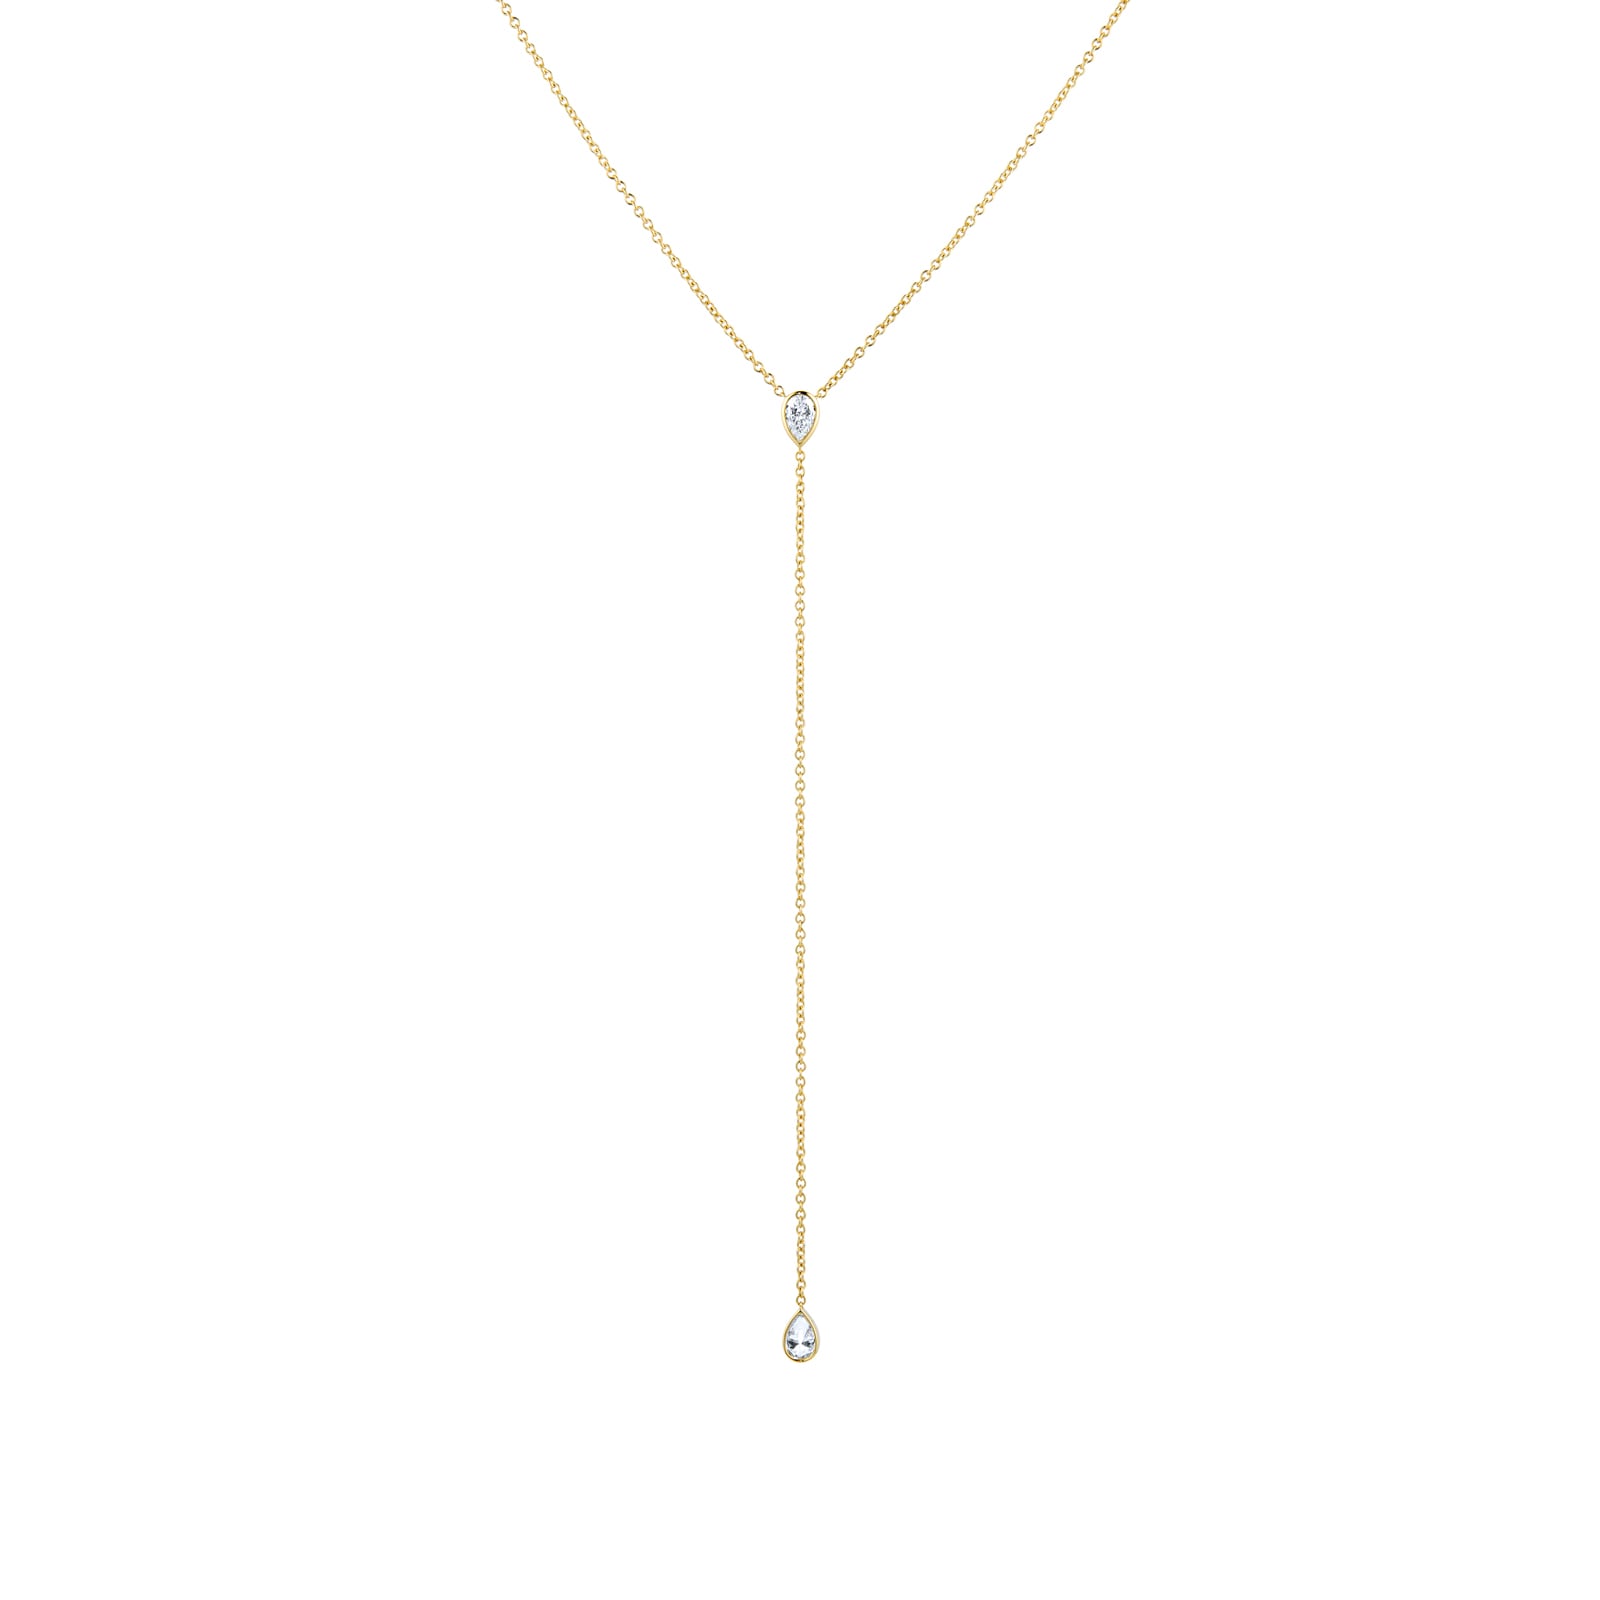 18k Yellow Gold 0.46cttw Pear Cut Diamond Lariat Necklace